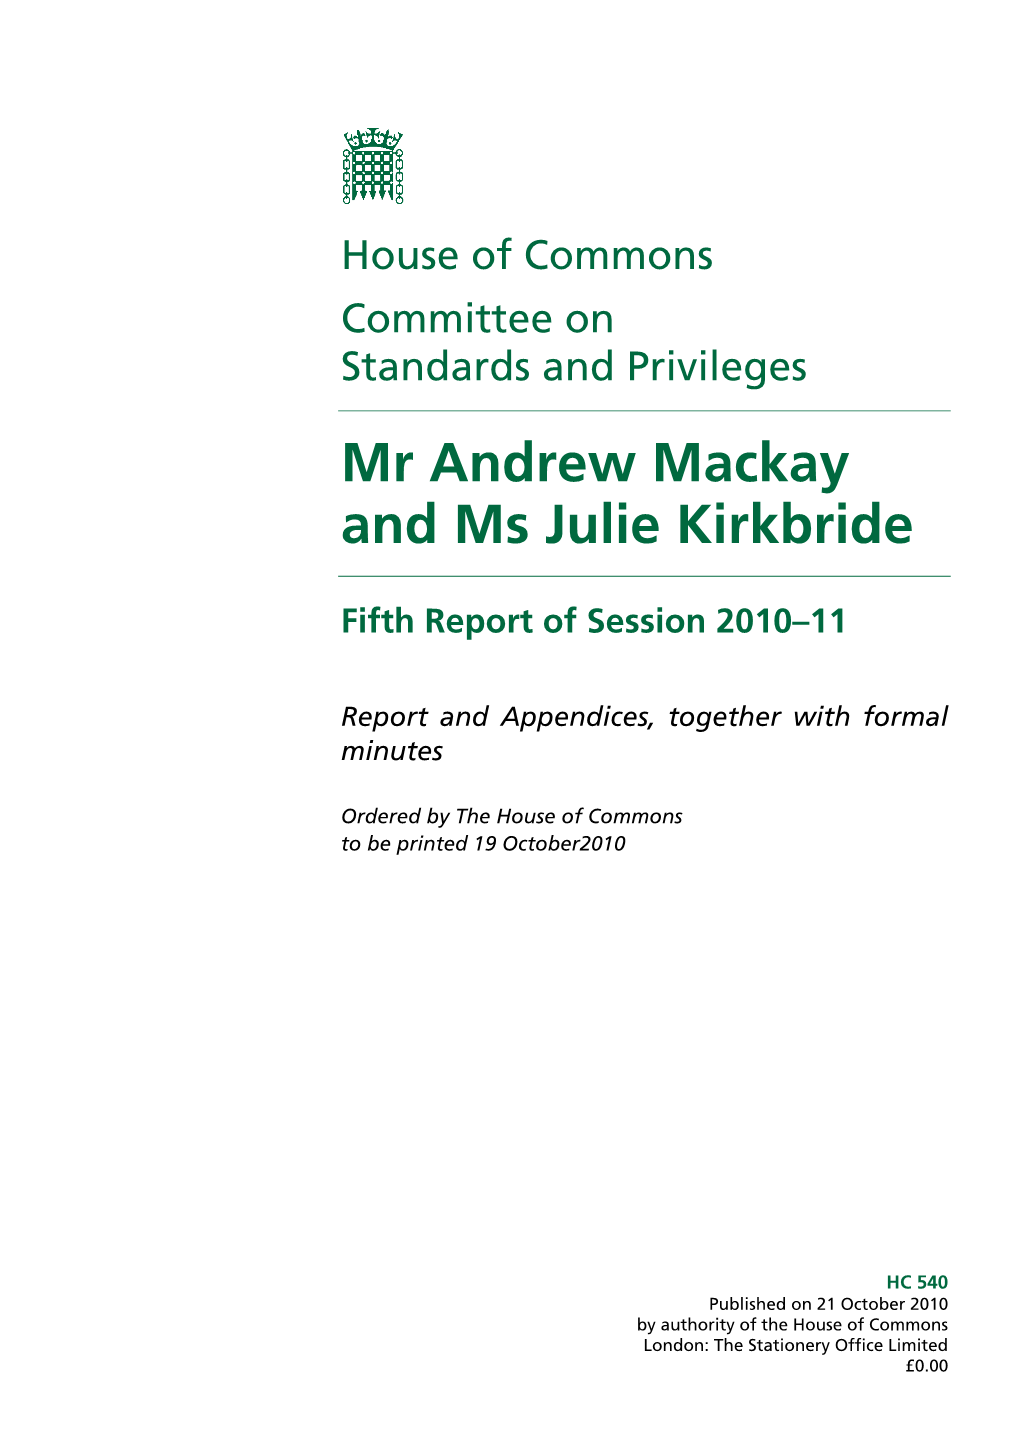 Mr Andrew Mackay and Ms Julie Kirkbride